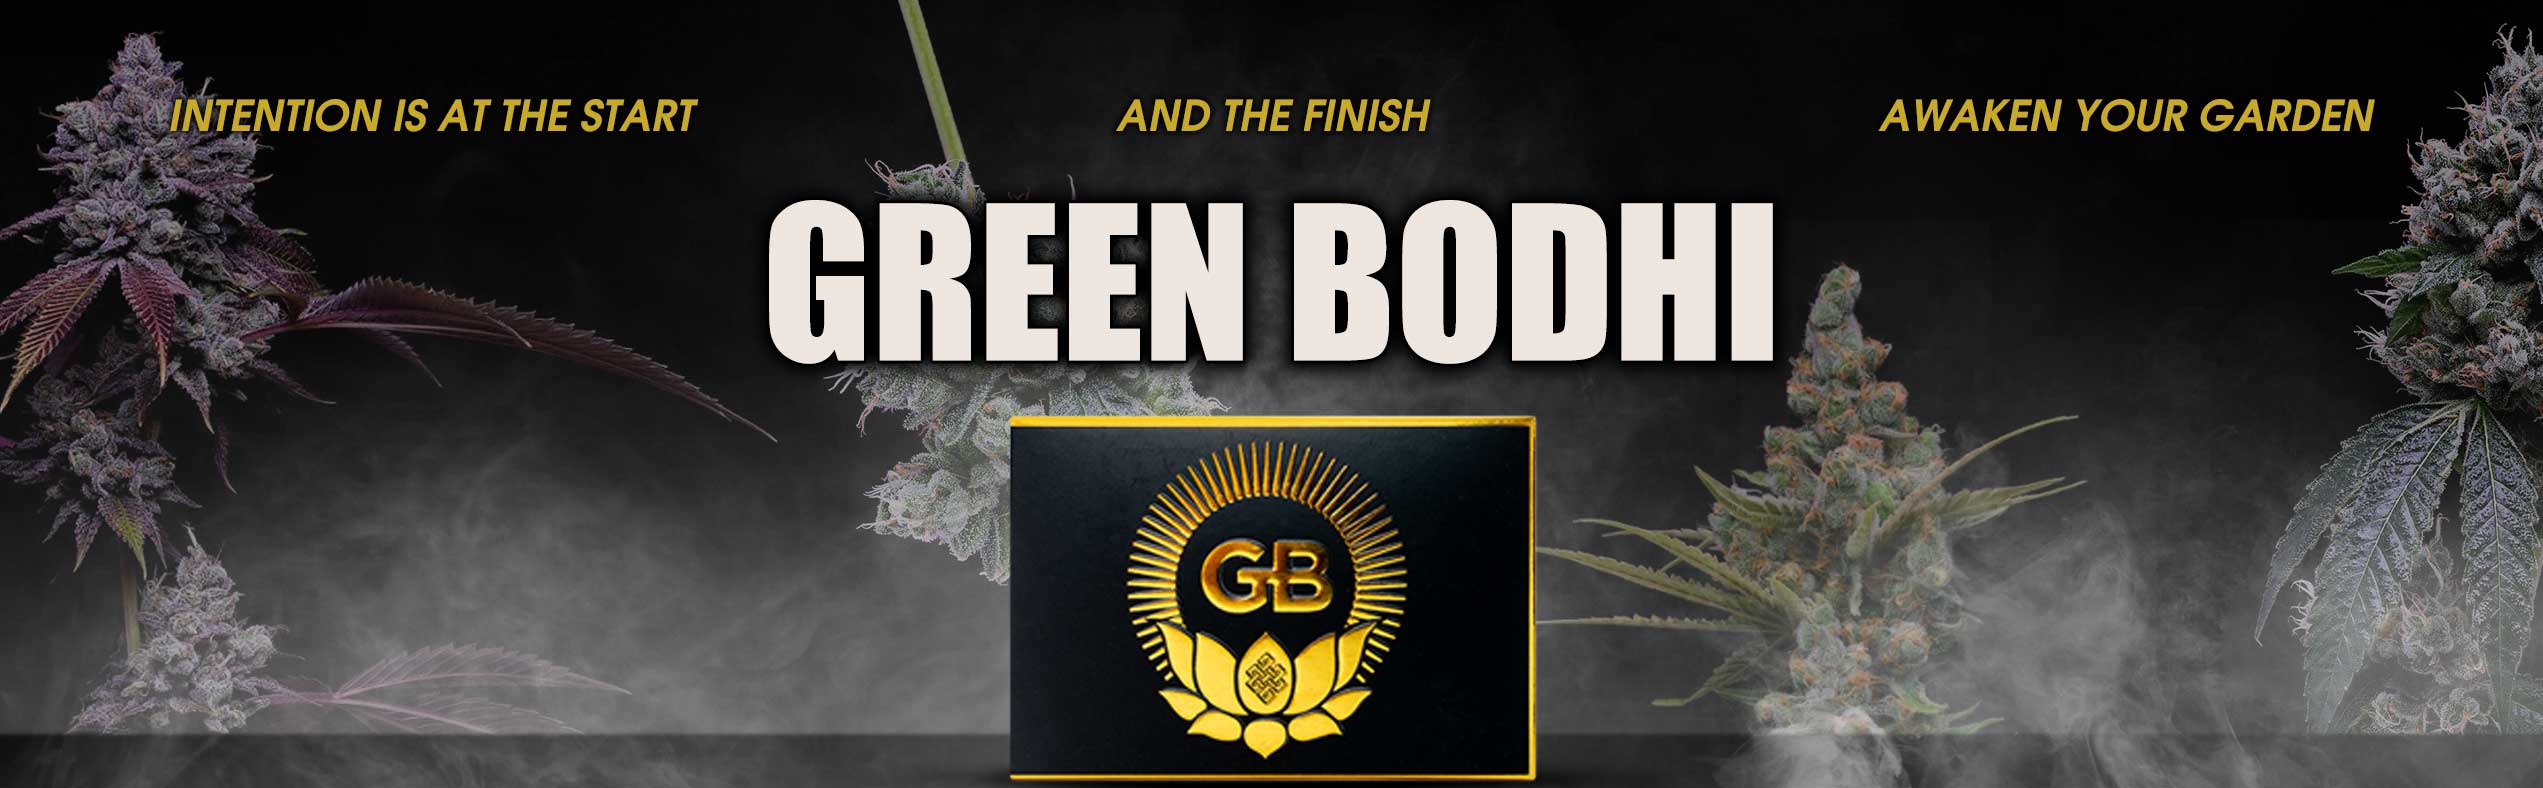 Green Bodhi Cannabis Seeds